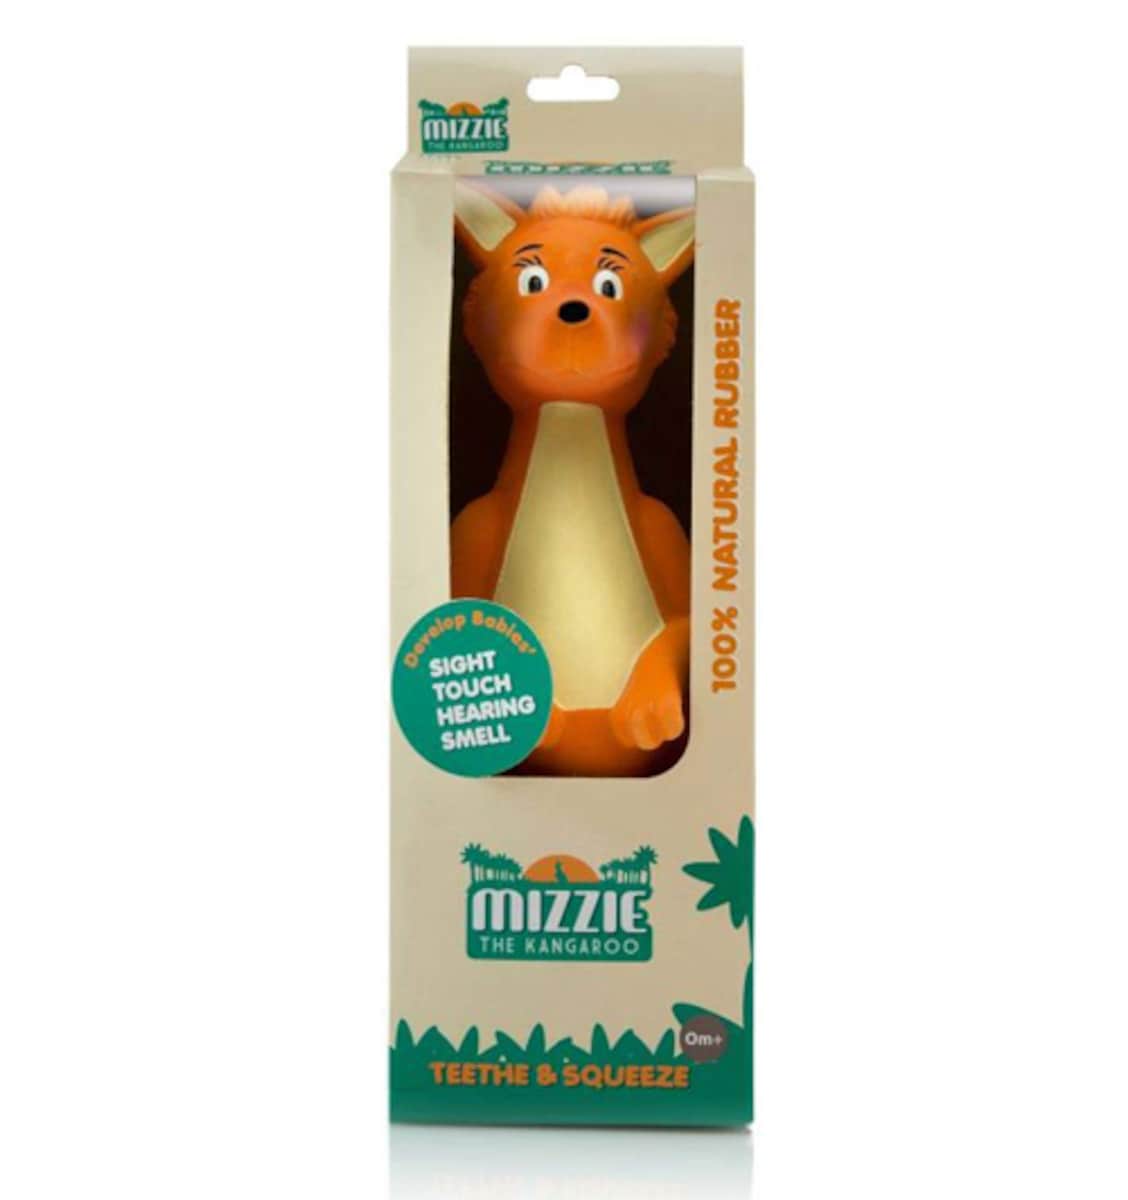 Mizzie The Kangaroo 100% Natural Rubber Baby Teething Toy